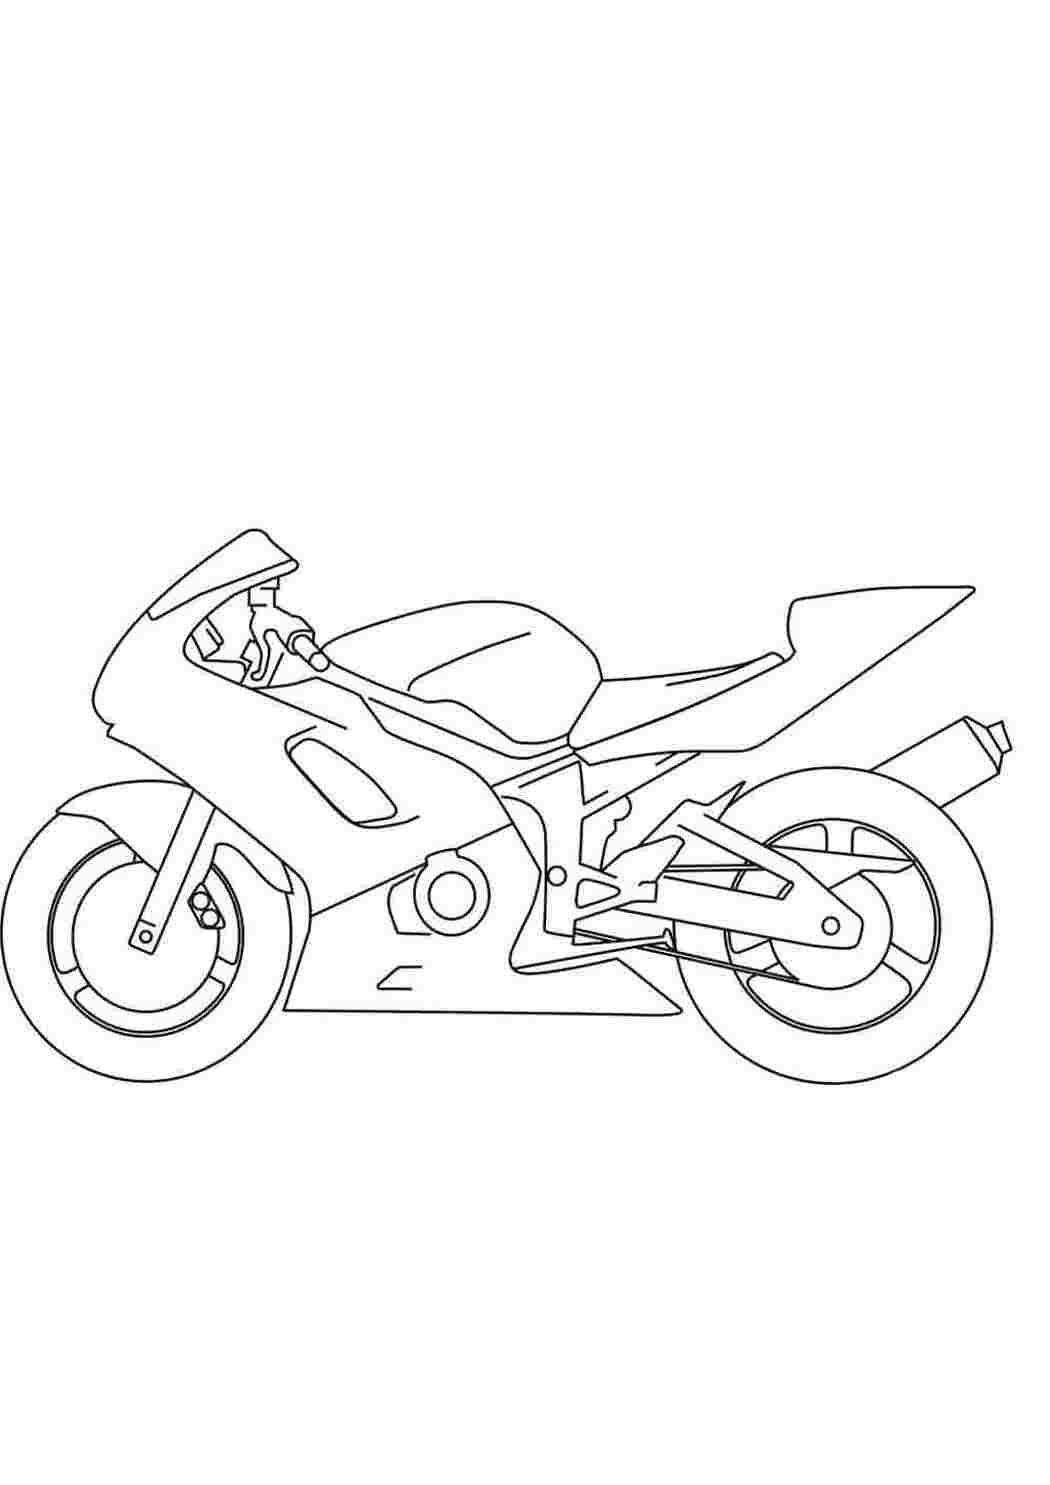 Раскраски Мотоцикл для гонок. Картинки раскраски. Мотоцикл для гонок. Красивые раскраски.